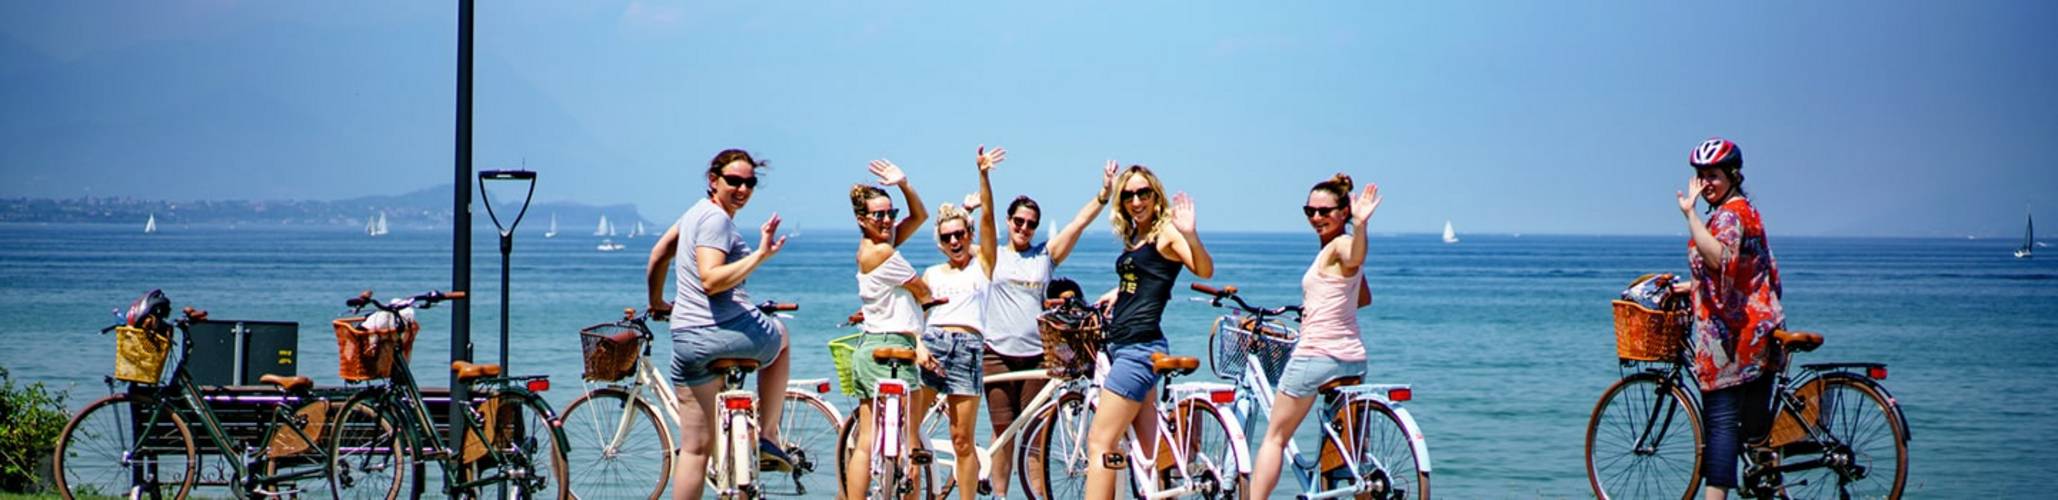 out-of-town bike tour on Lake Garda